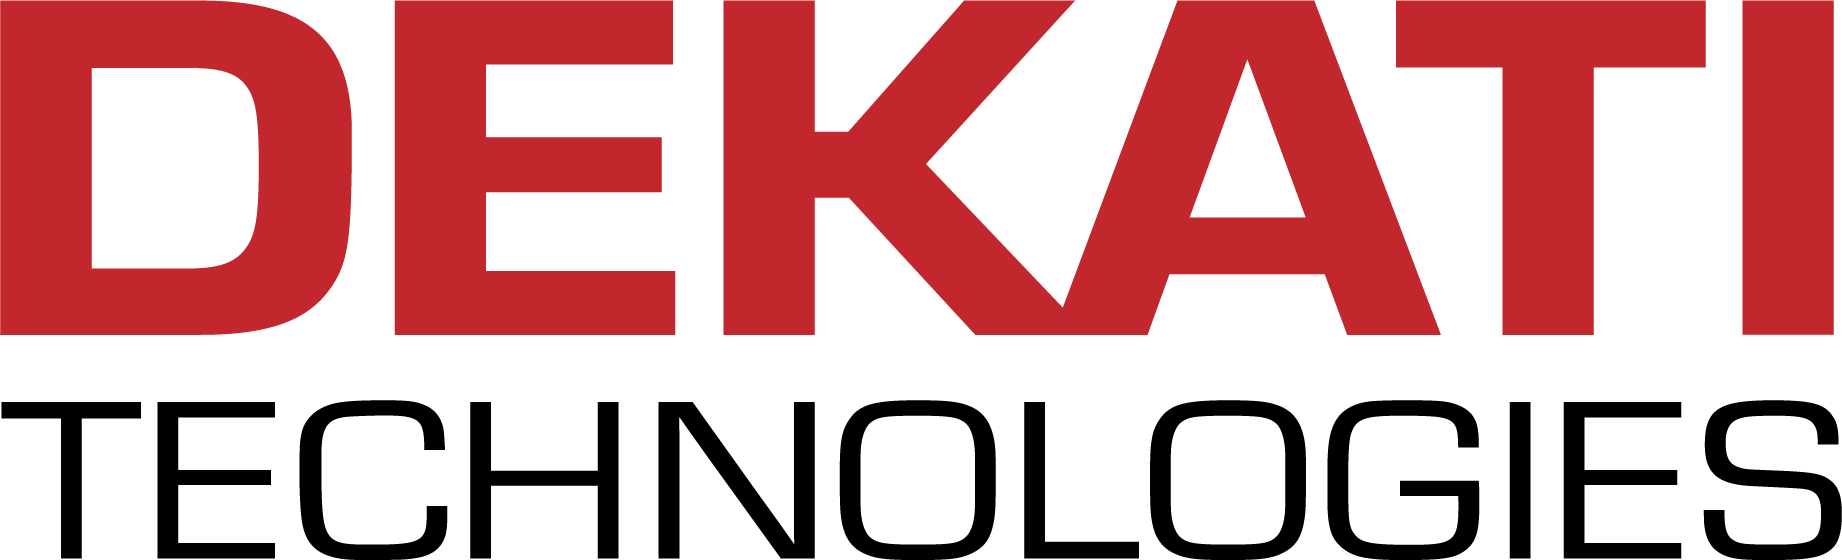 Dekati Technologies Logo